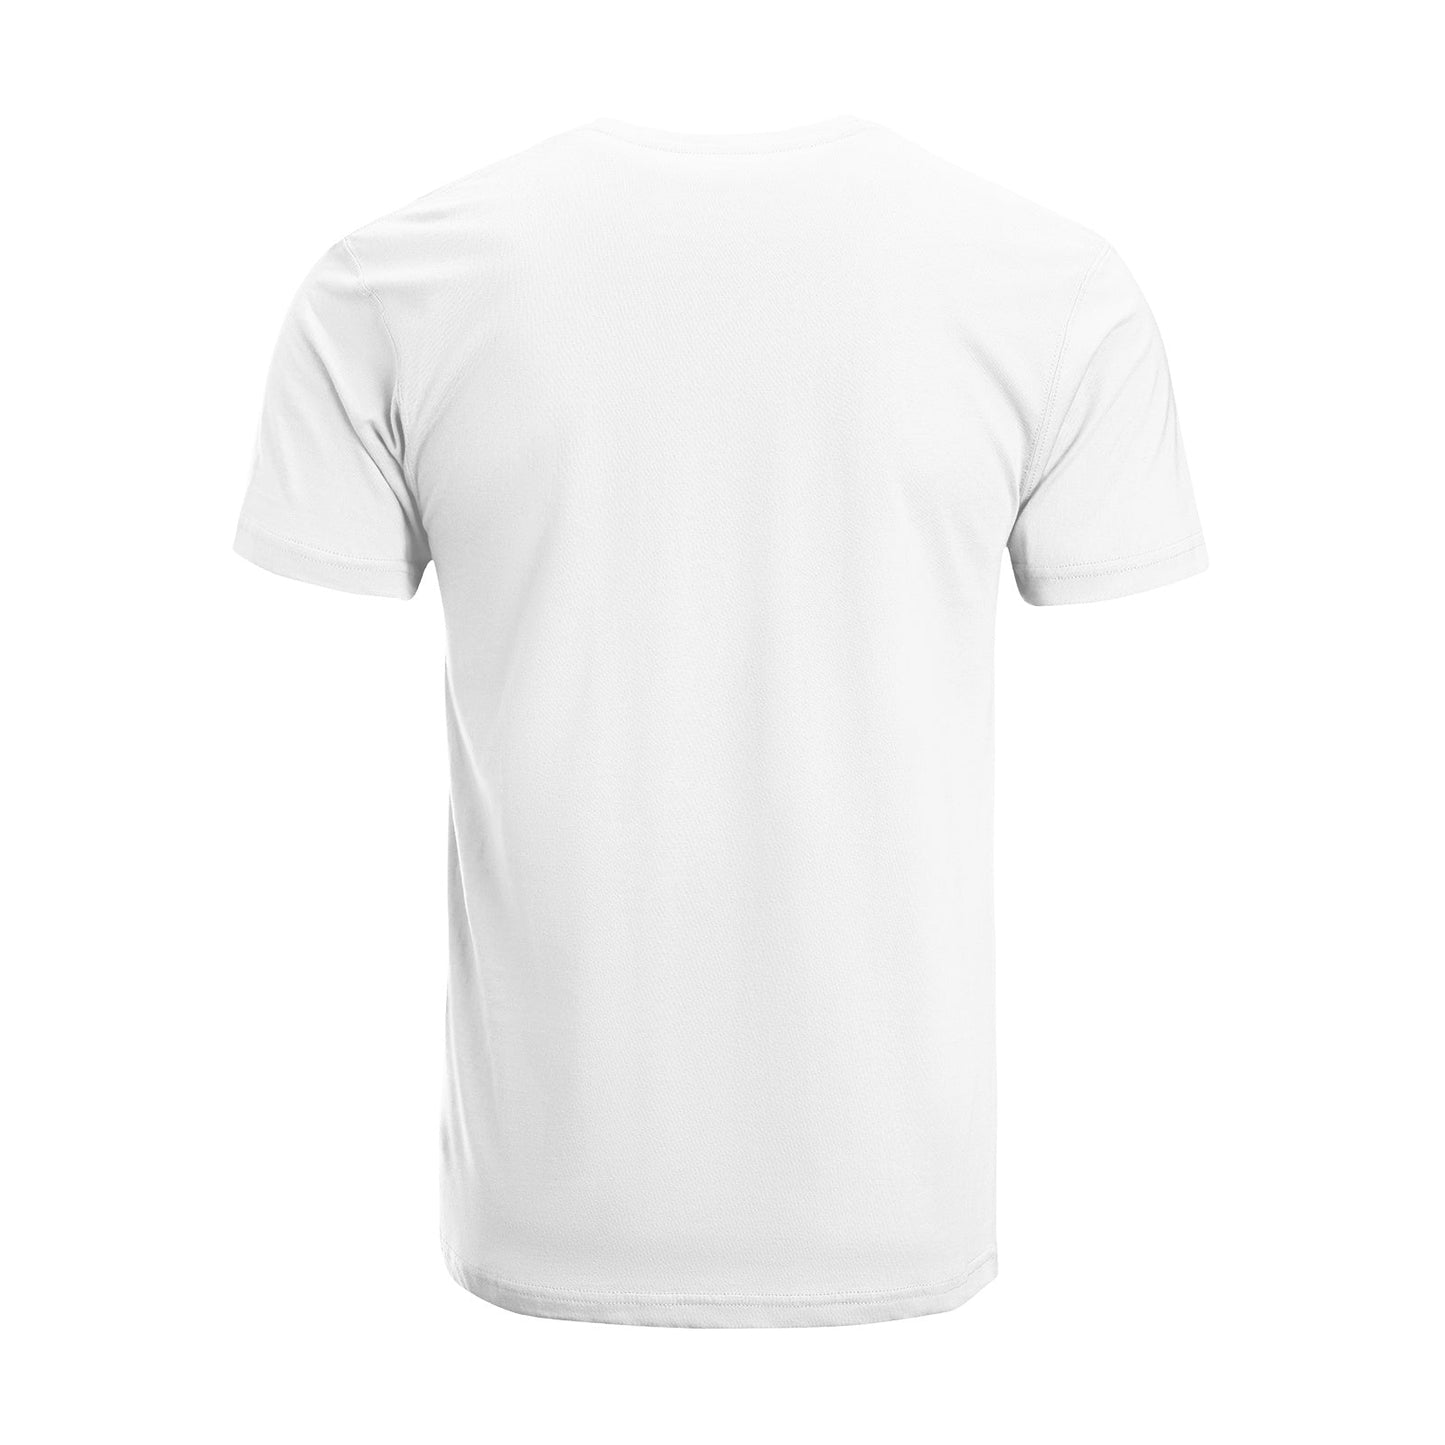 Unisex Short Sleeve Crew Neck Cotton Jersey T-Shirt Gym No. 32 - Tara-Outfits.com